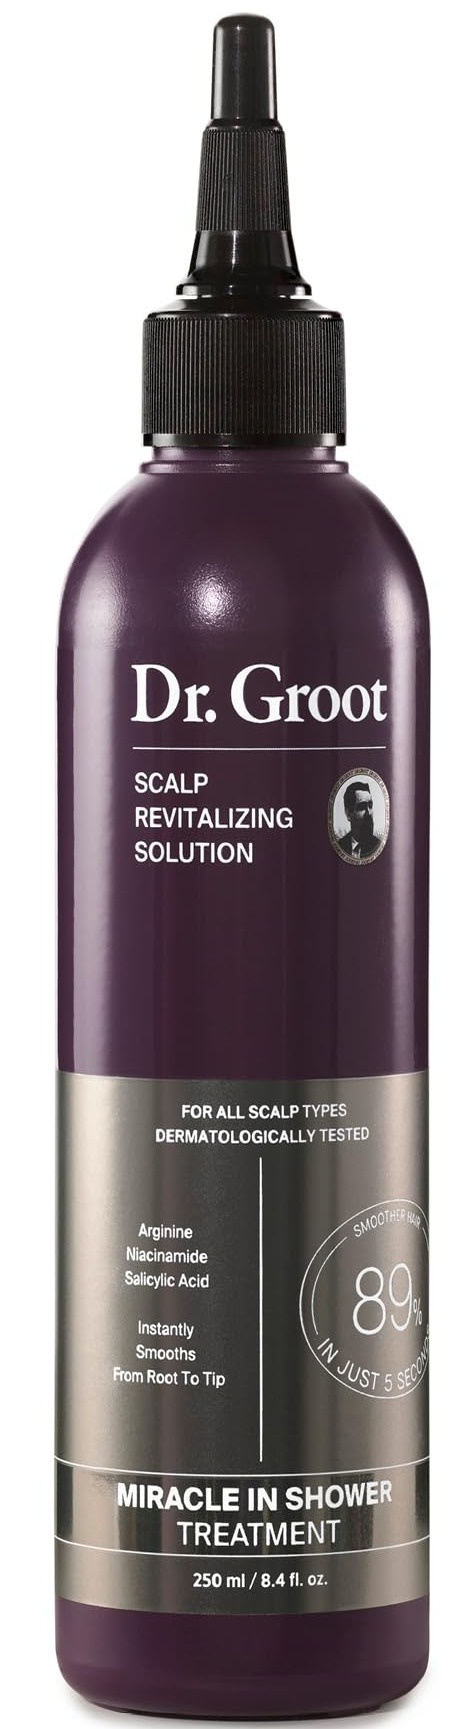 DR GROOT Scalp Revitalizing Solution